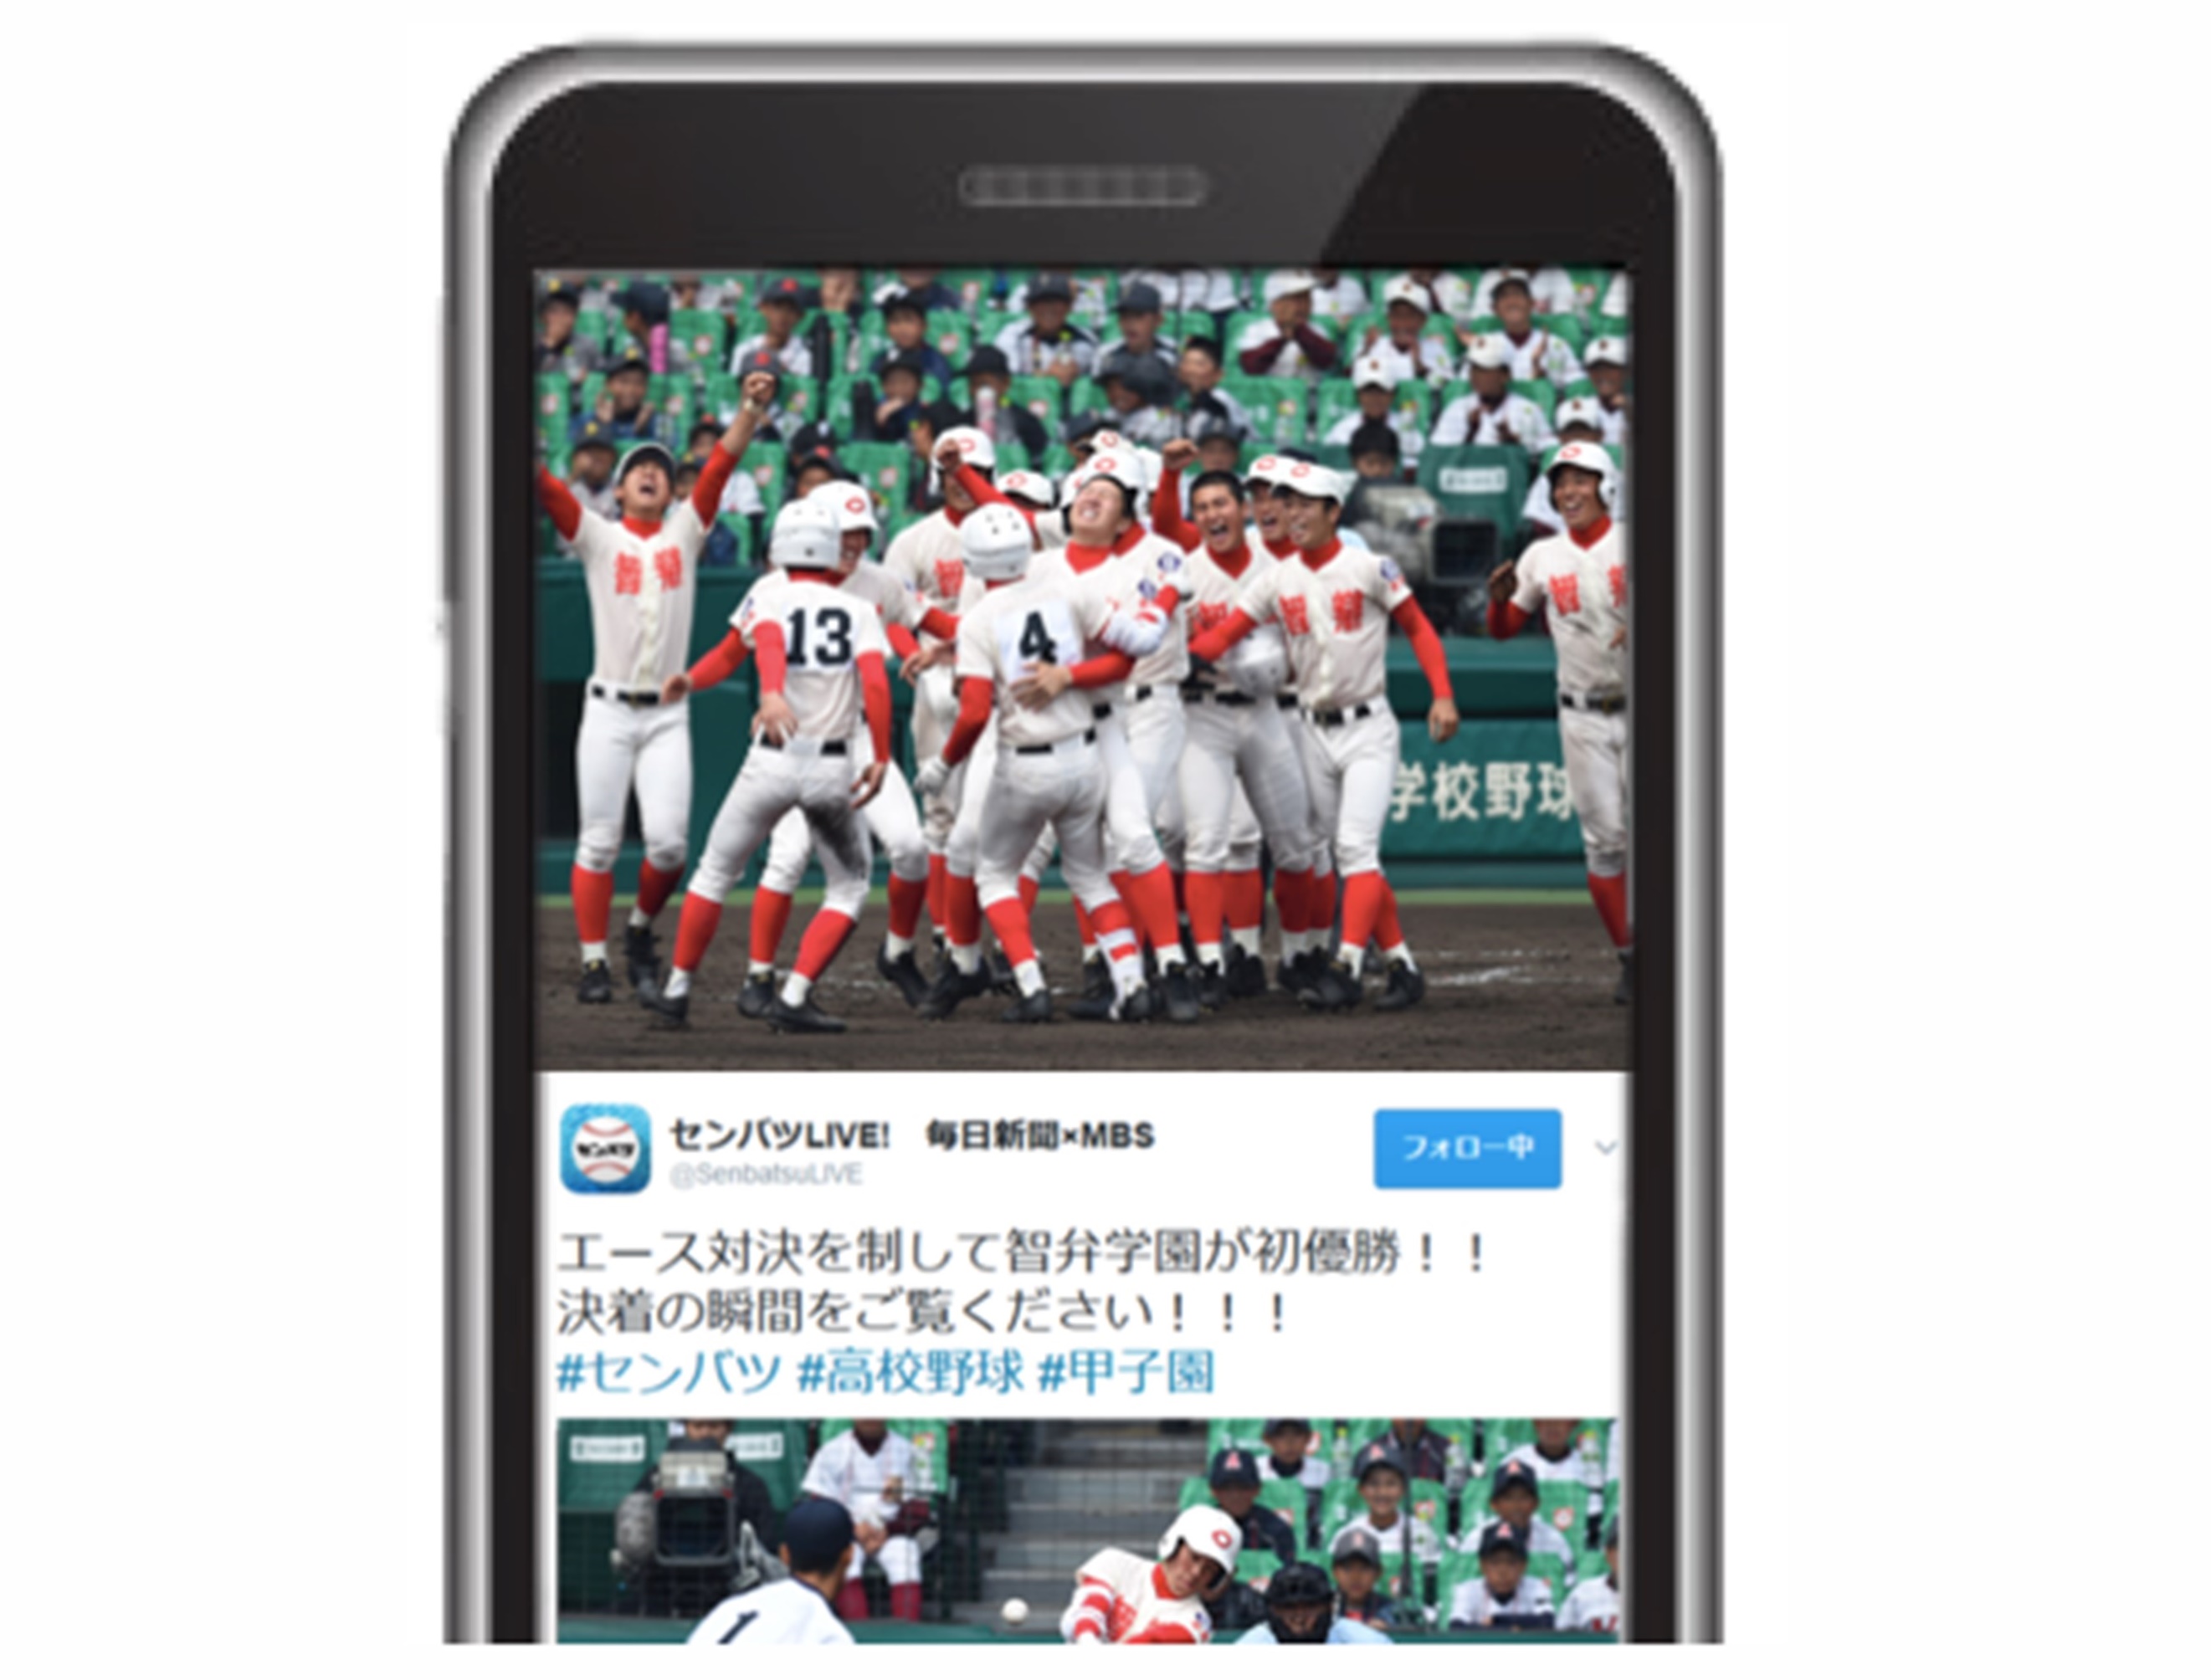 Twitter 春のセンバツ高校野球の初戦と決勝をライブ配信 デザインってオモシロイ Mdn Design Interactive